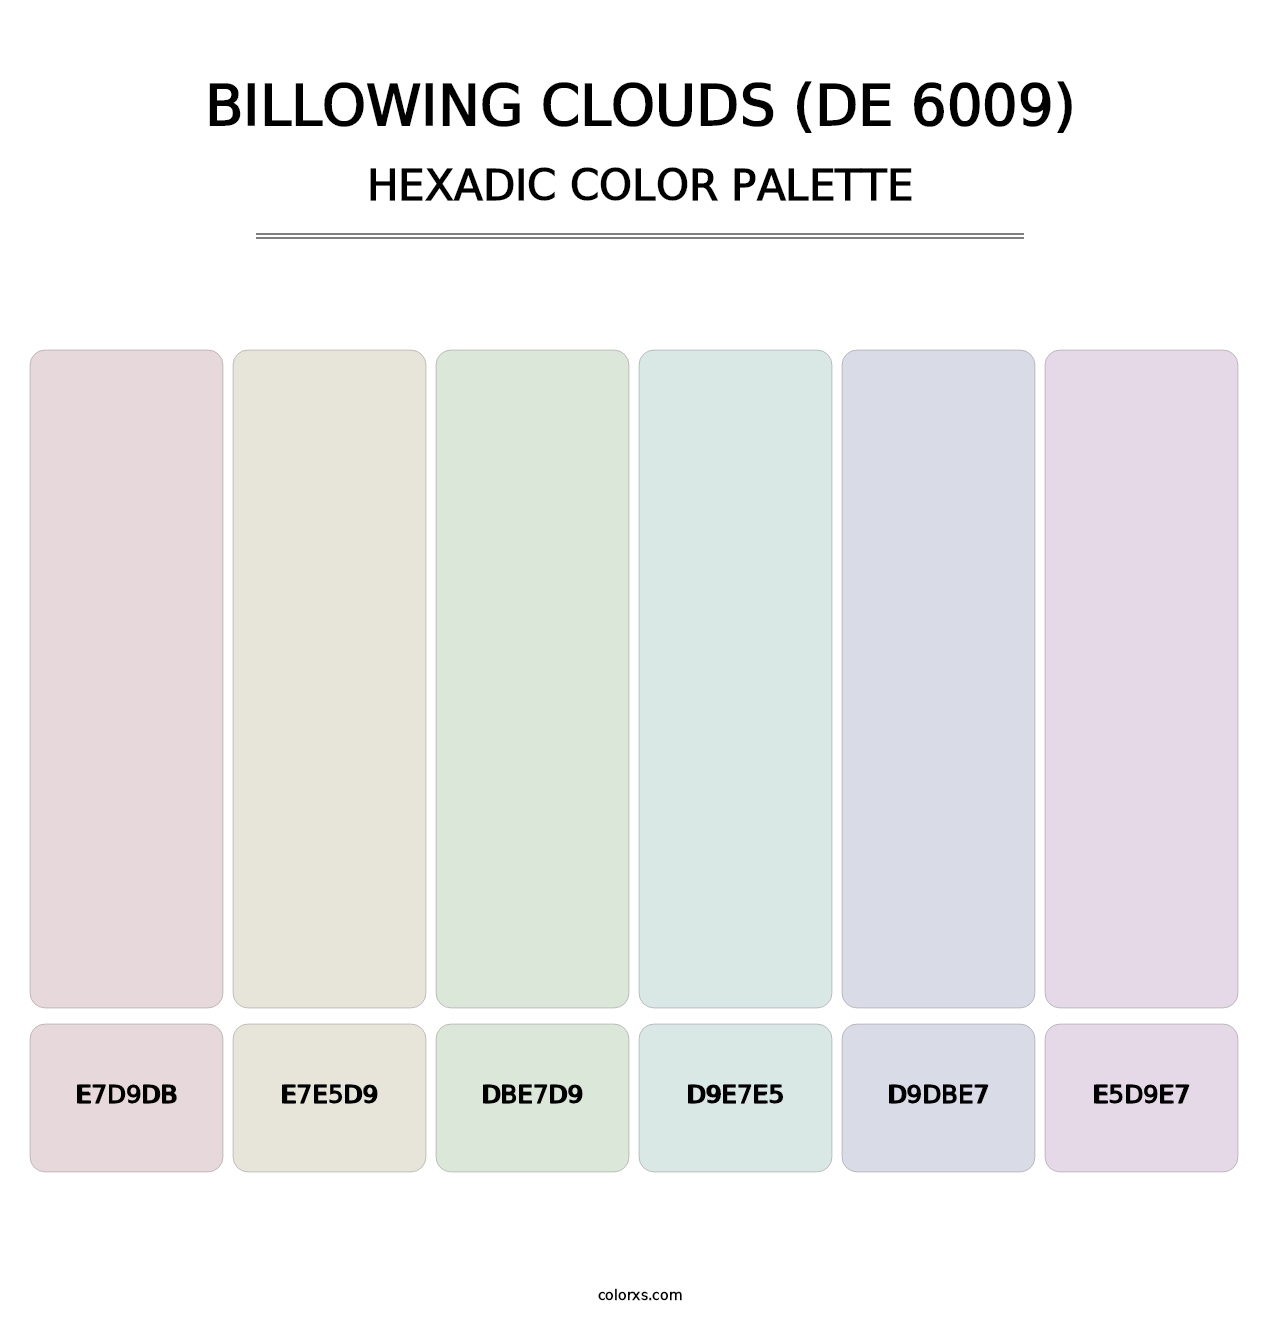 Billowing Clouds (DE 6009) - Hexadic Color Palette